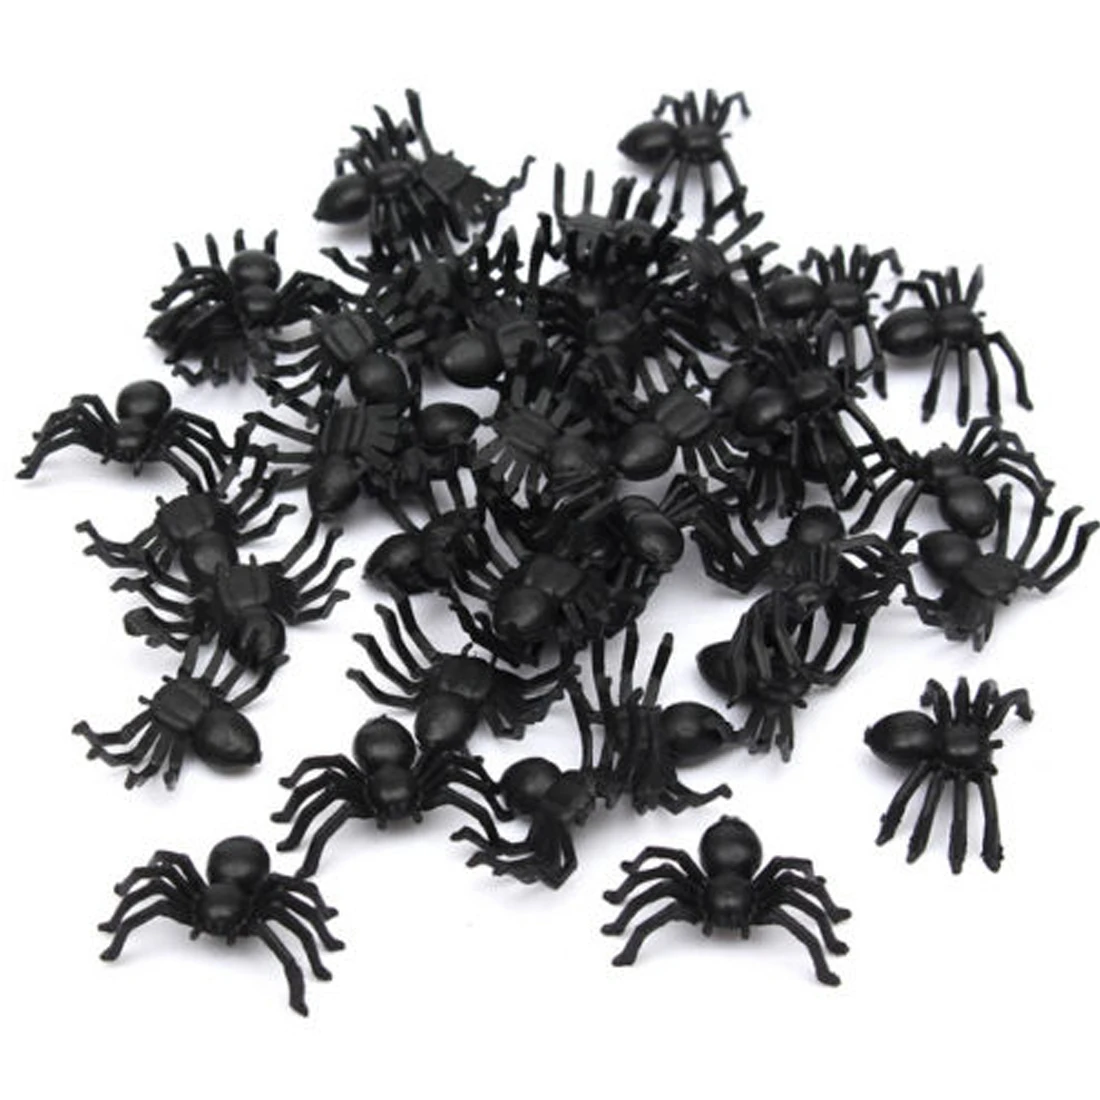 50pcs/set Spider Halloween Decoration Festival Supplies Funny Prank Toys Decoration Realistic Prop Plastic